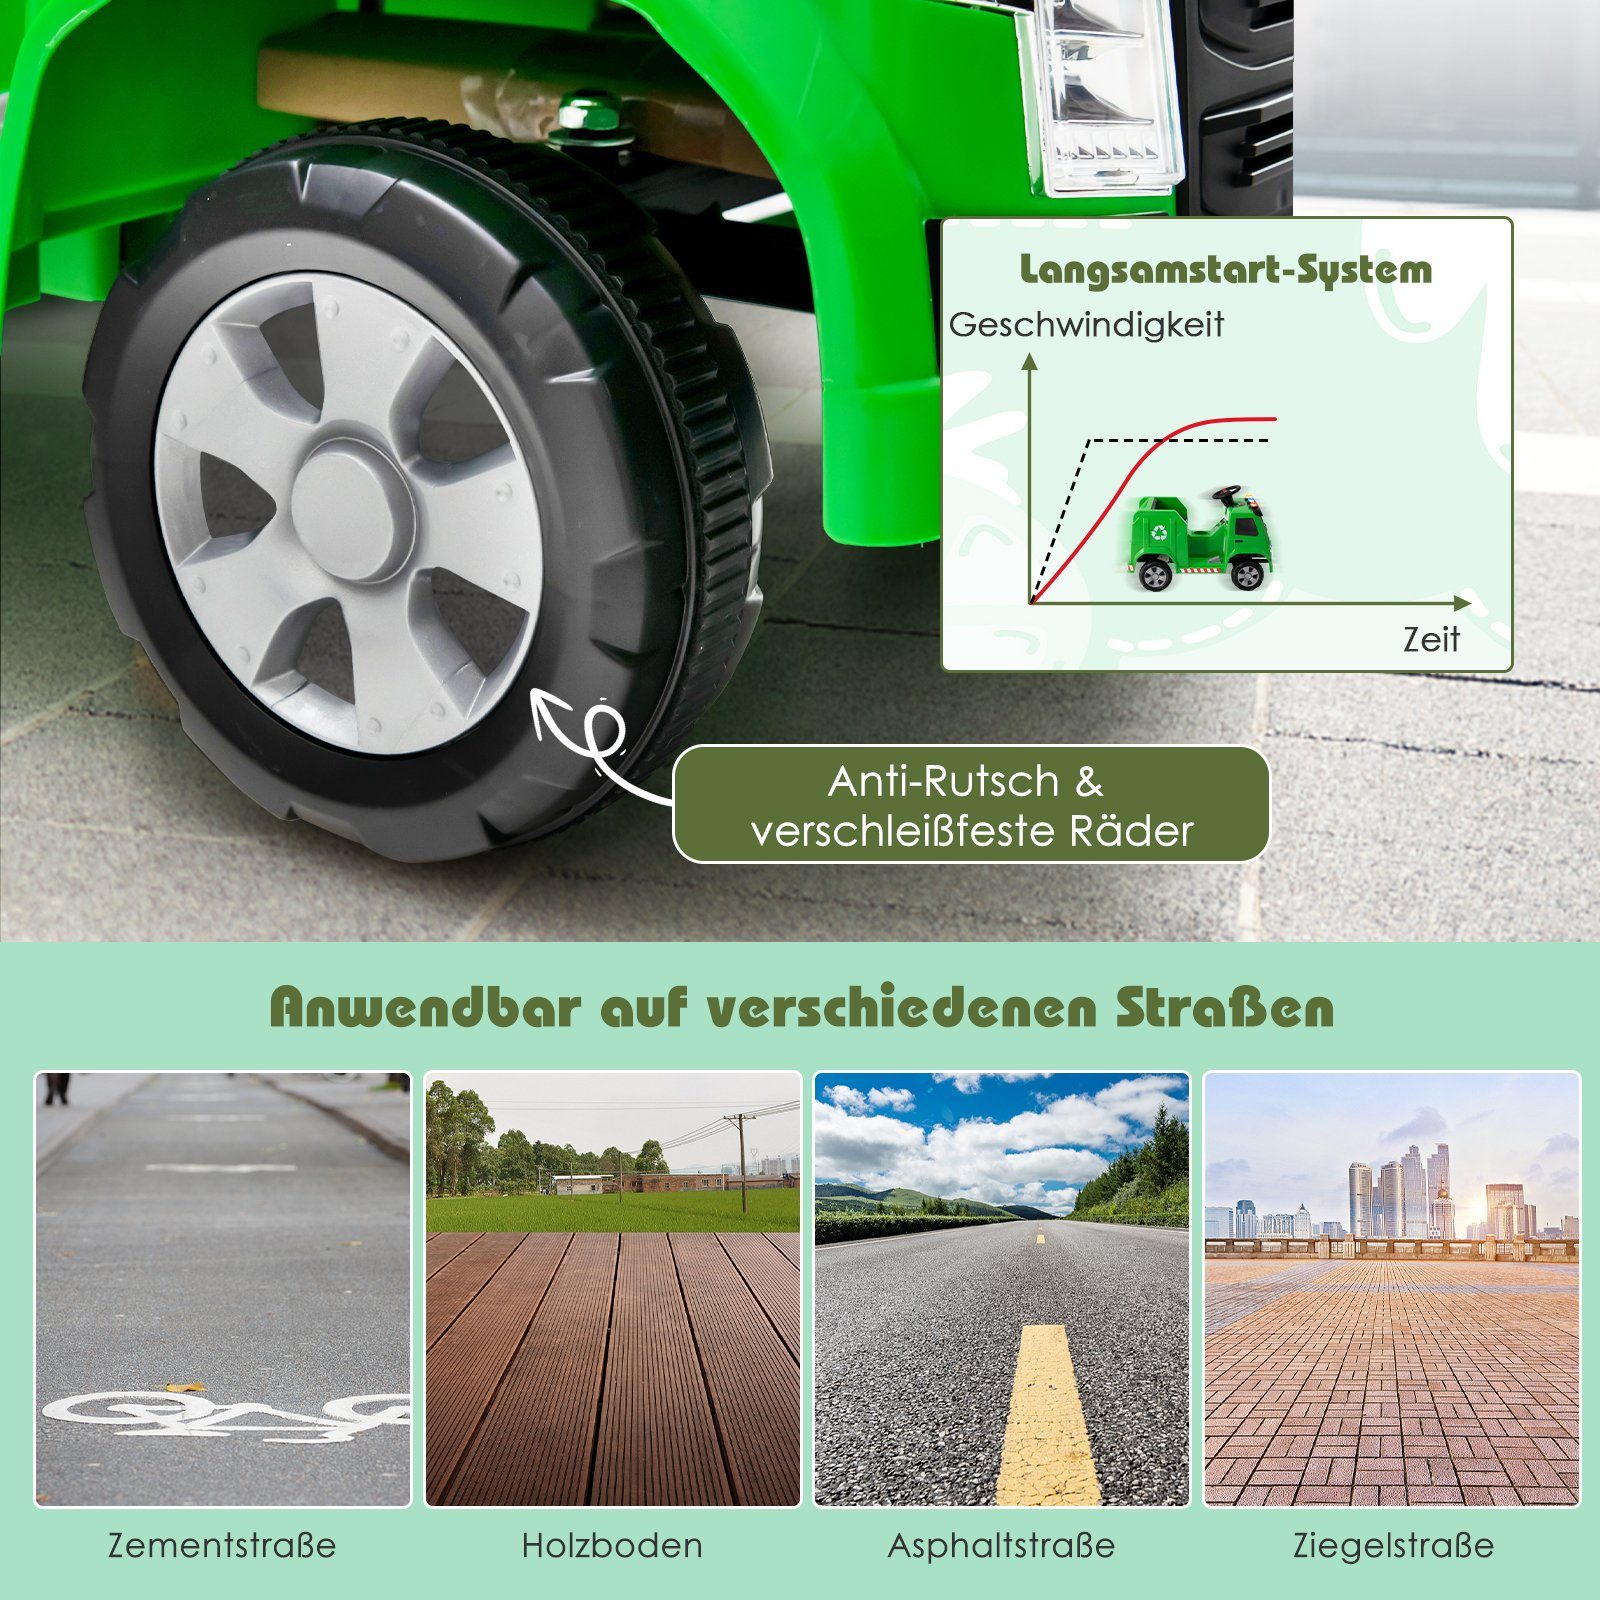 6 inkl. 12V Elektro-Kinderauto Zubehör COSTWAY Müllwagen, grün